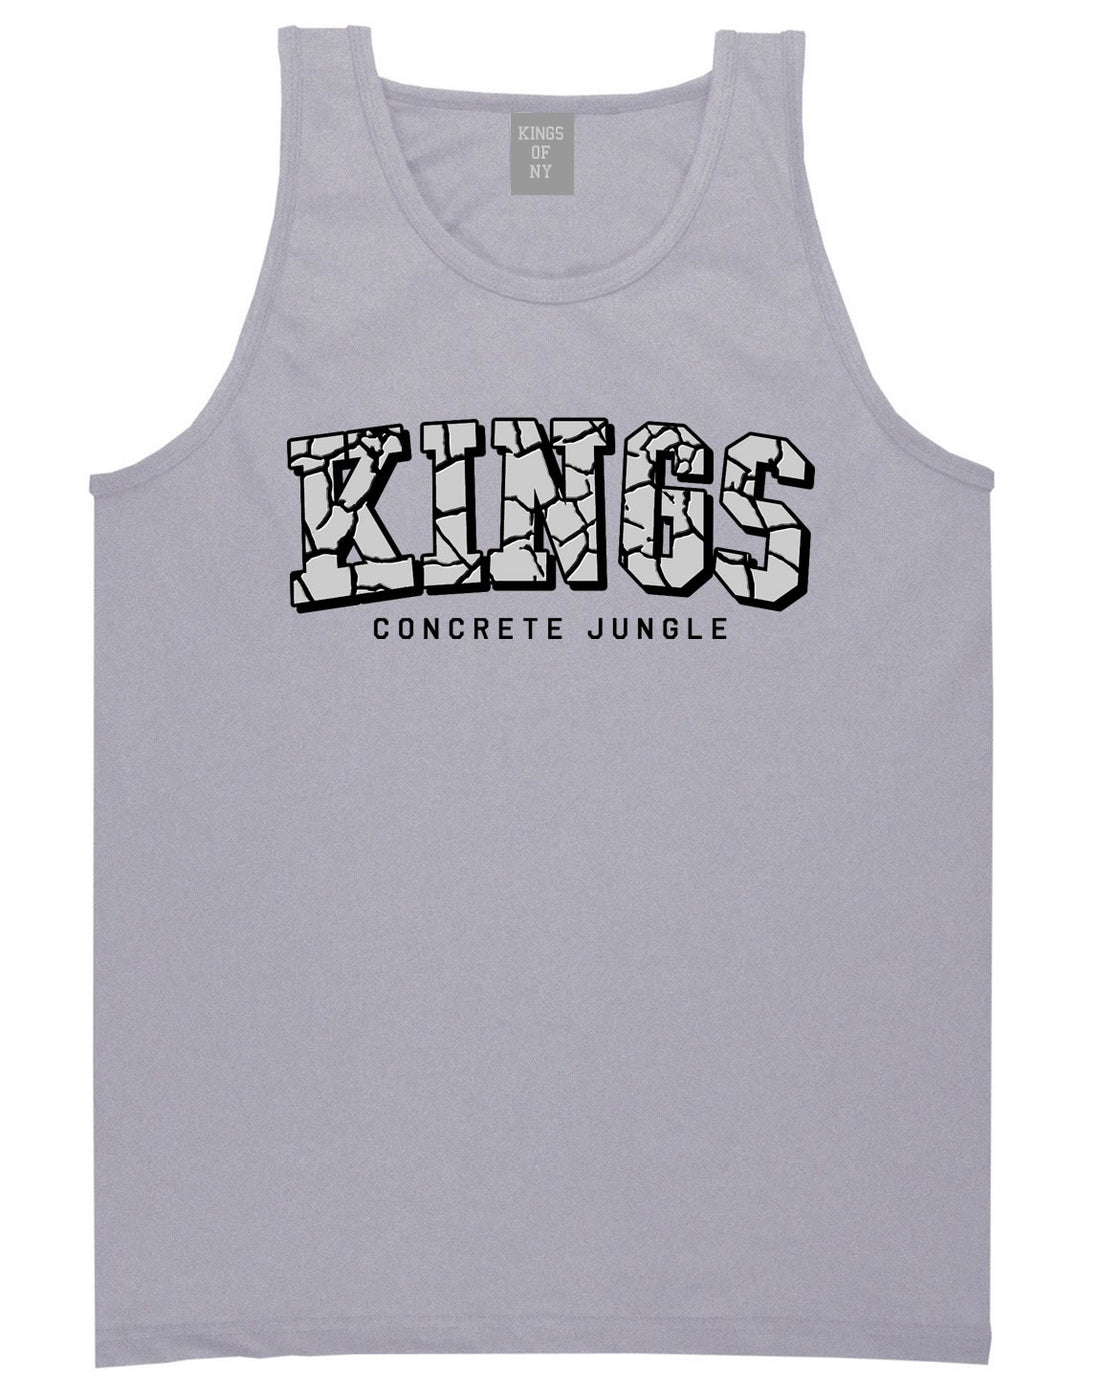 KINGS Conrete Jungle Mens Tank Top Shirt Grey